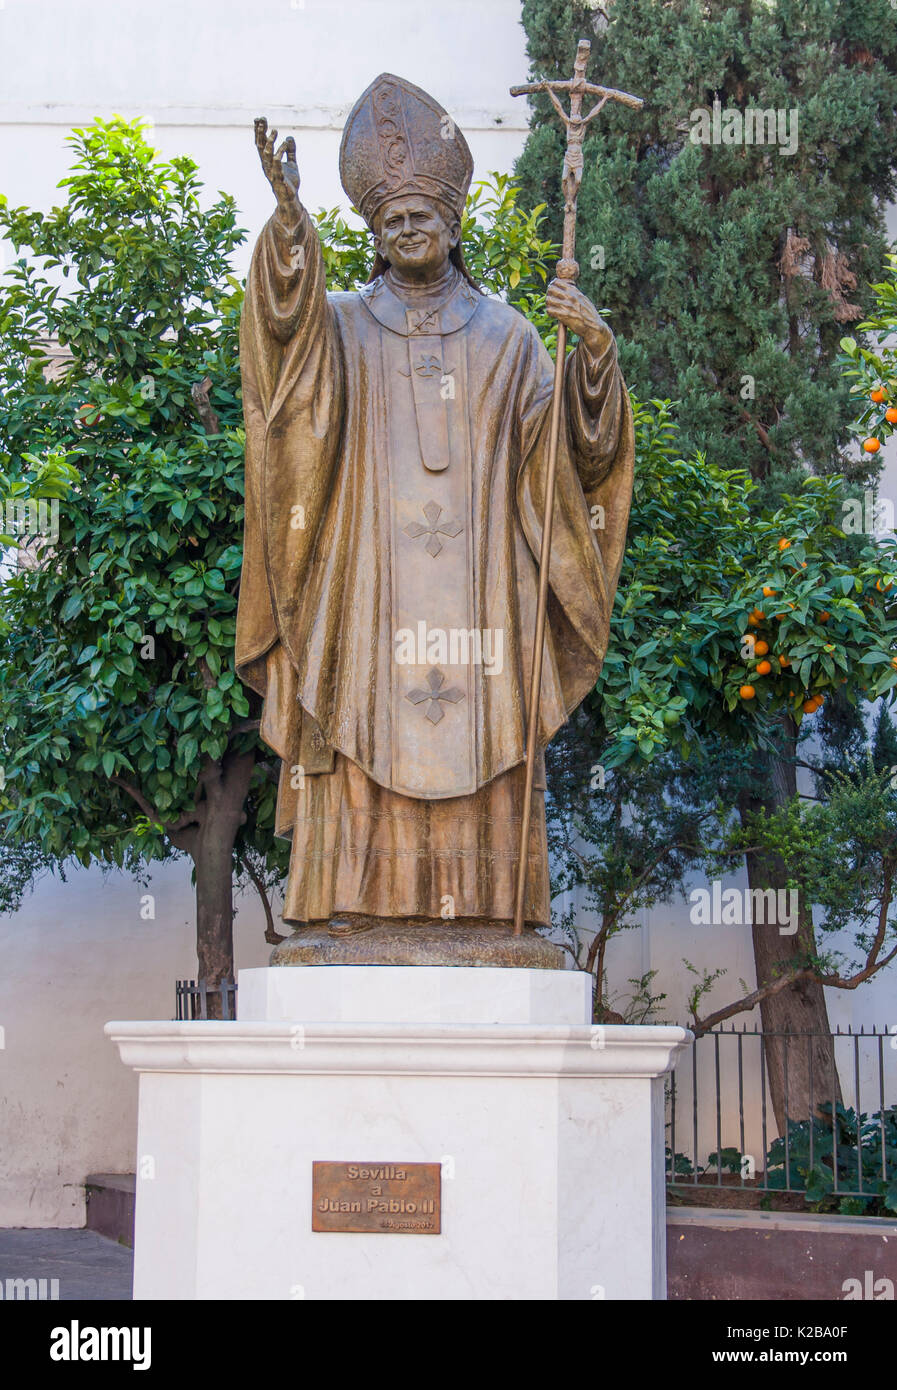 Plaza Virgen de los Reyes, Seville, Spain.  Statue of Pope Saint John Paul II, 1920 – 2005. Pope from 1978 to 2005. Stock Photo